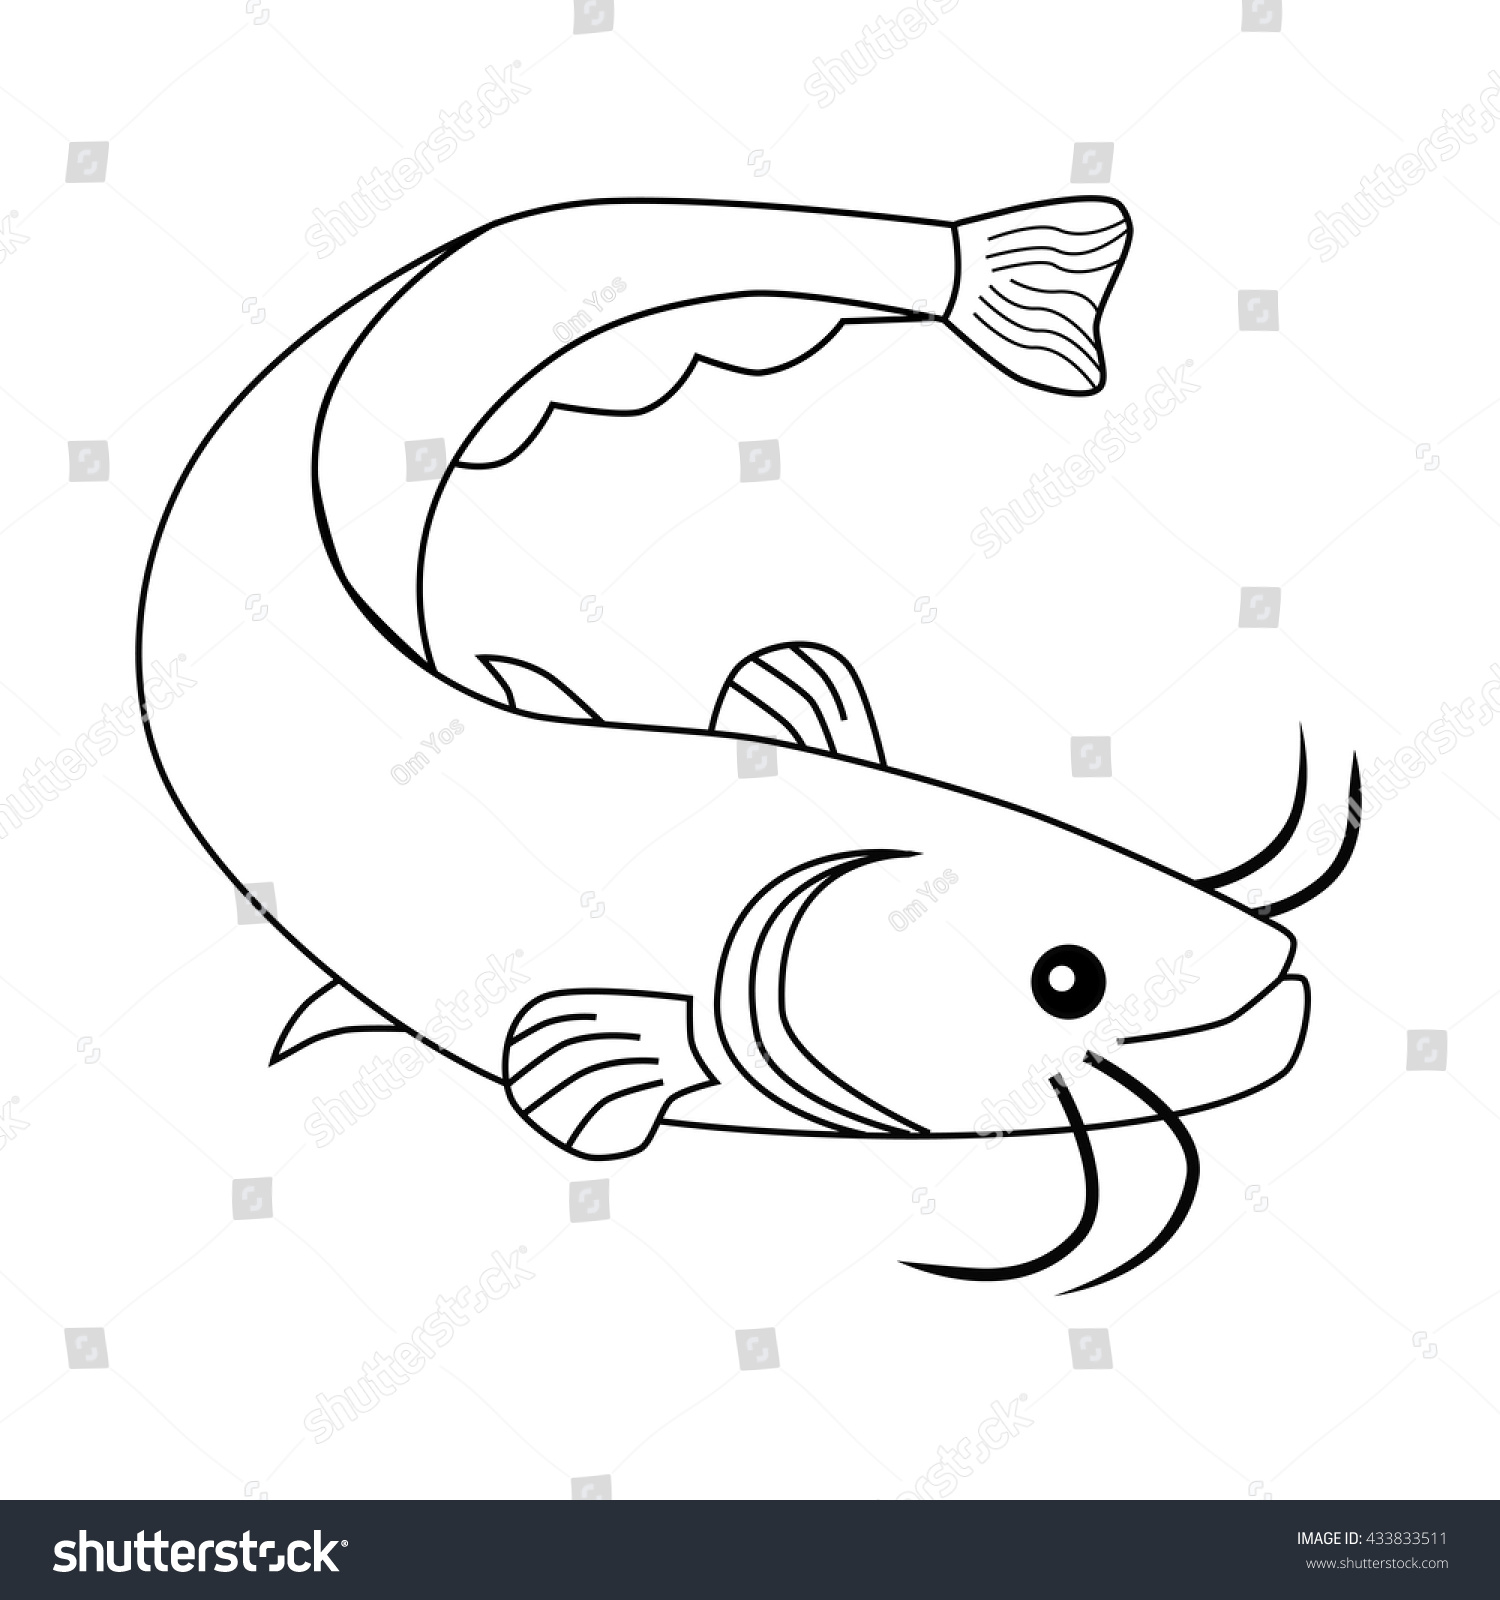 Outline Cat Fish Stock Vector 433833511 - Shutterstock